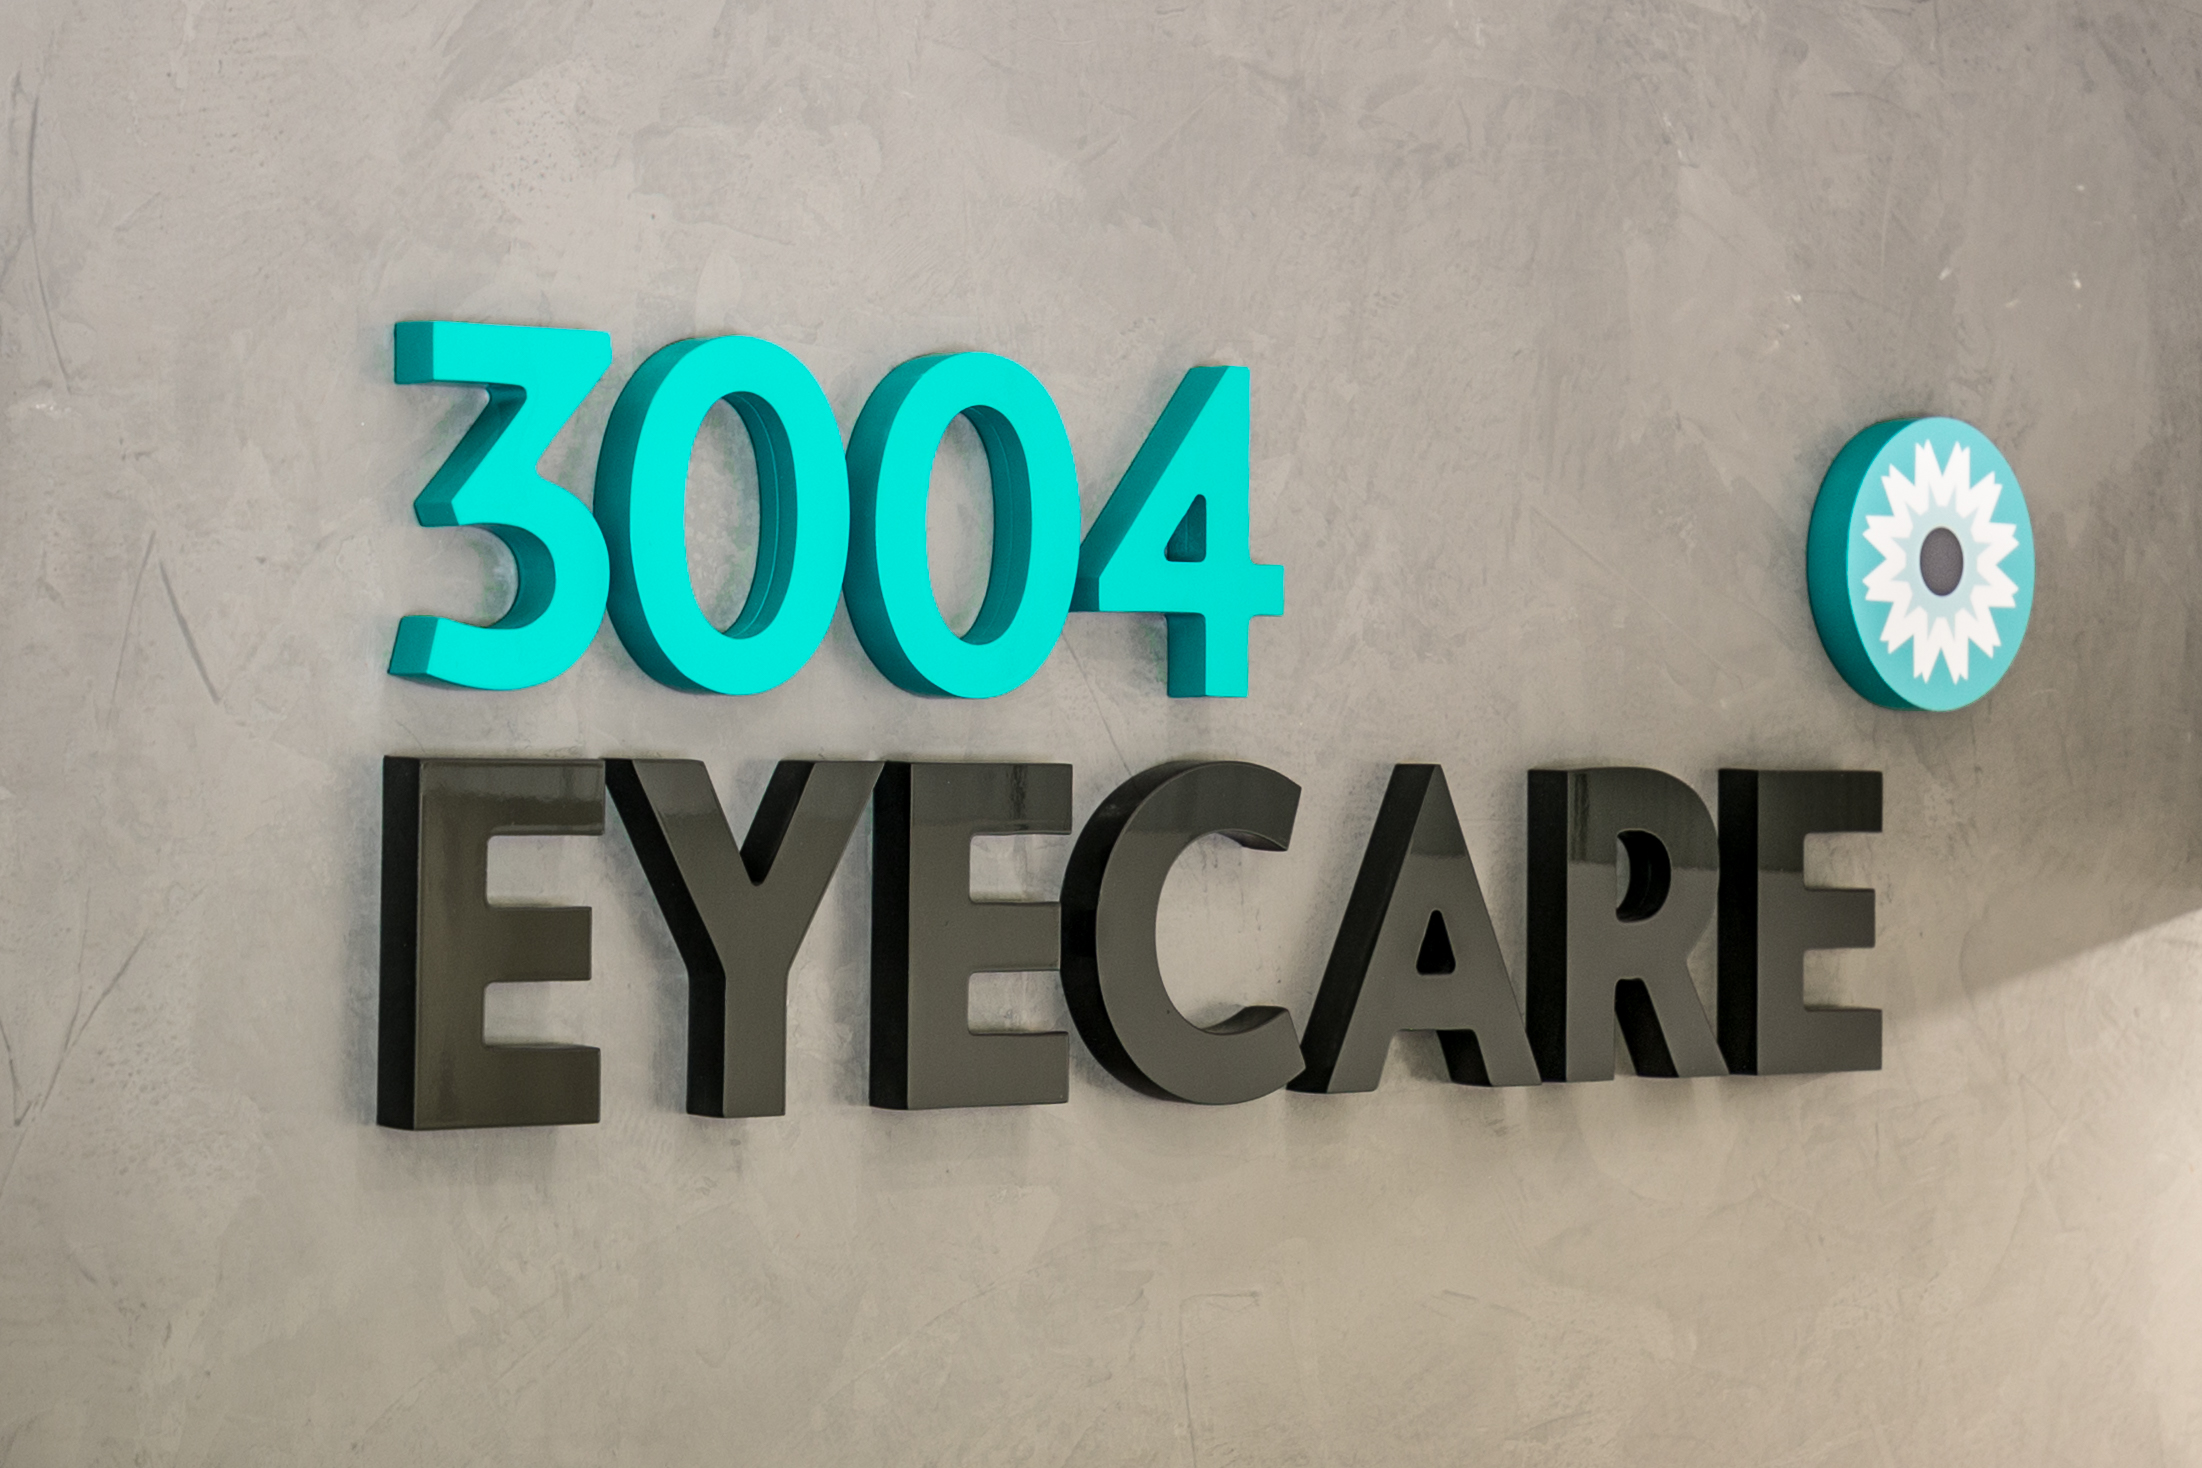 3004 EyeCare-10.jpg